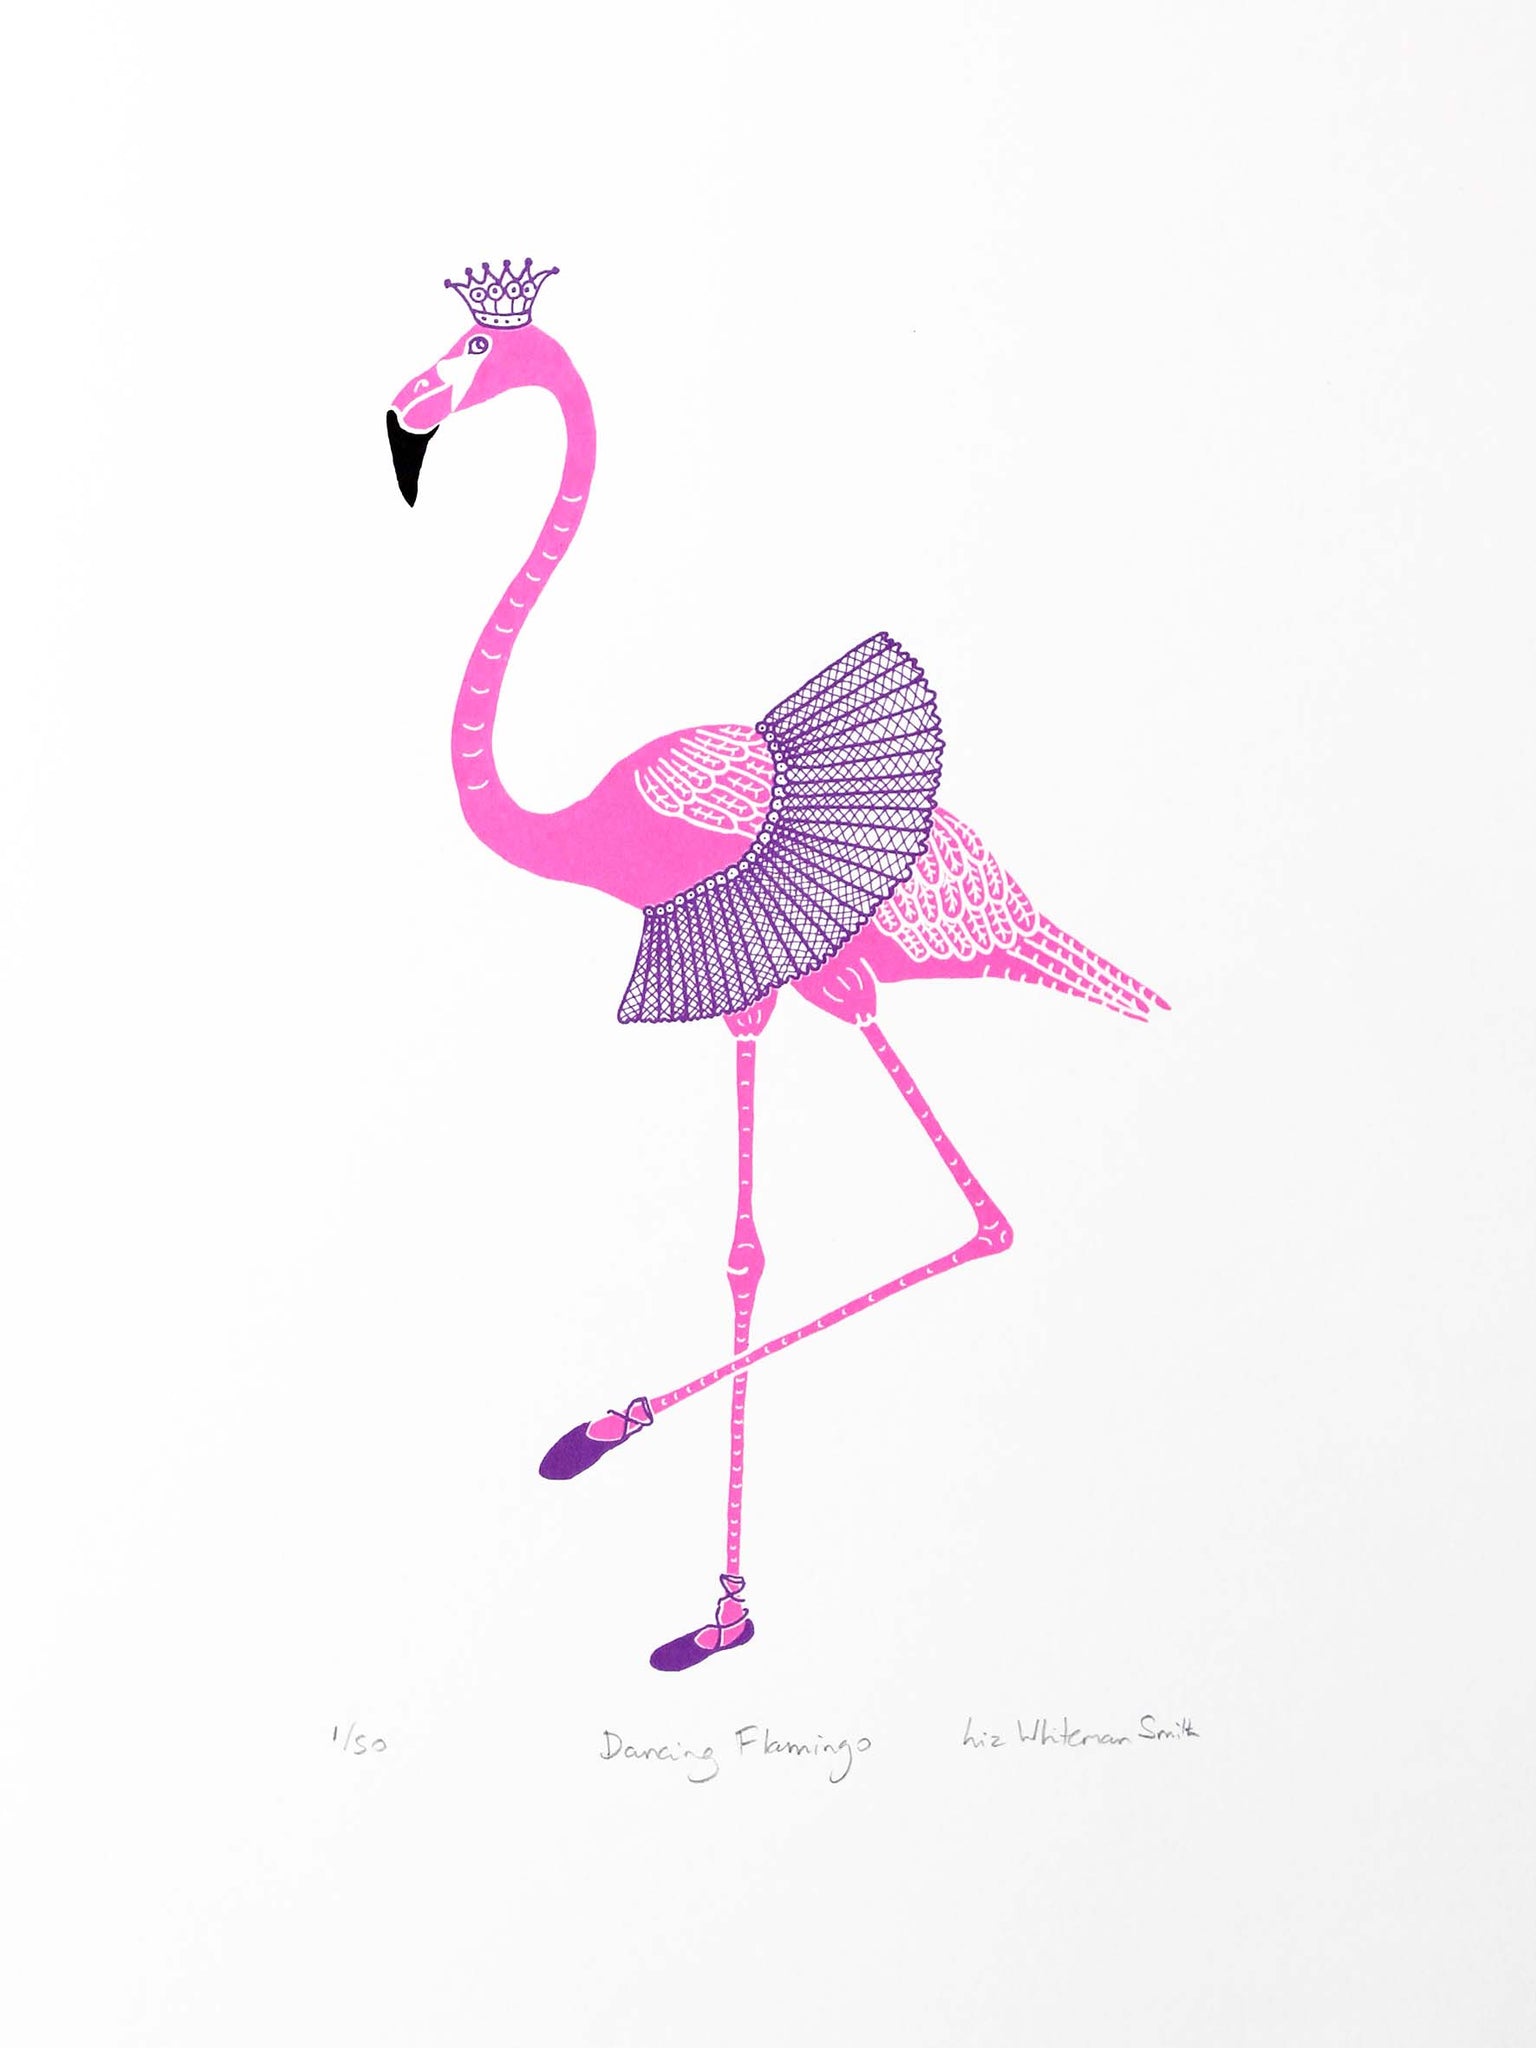 Ballet dancing flamingo screen print by Liz Whiteman Smith pink and purple creature